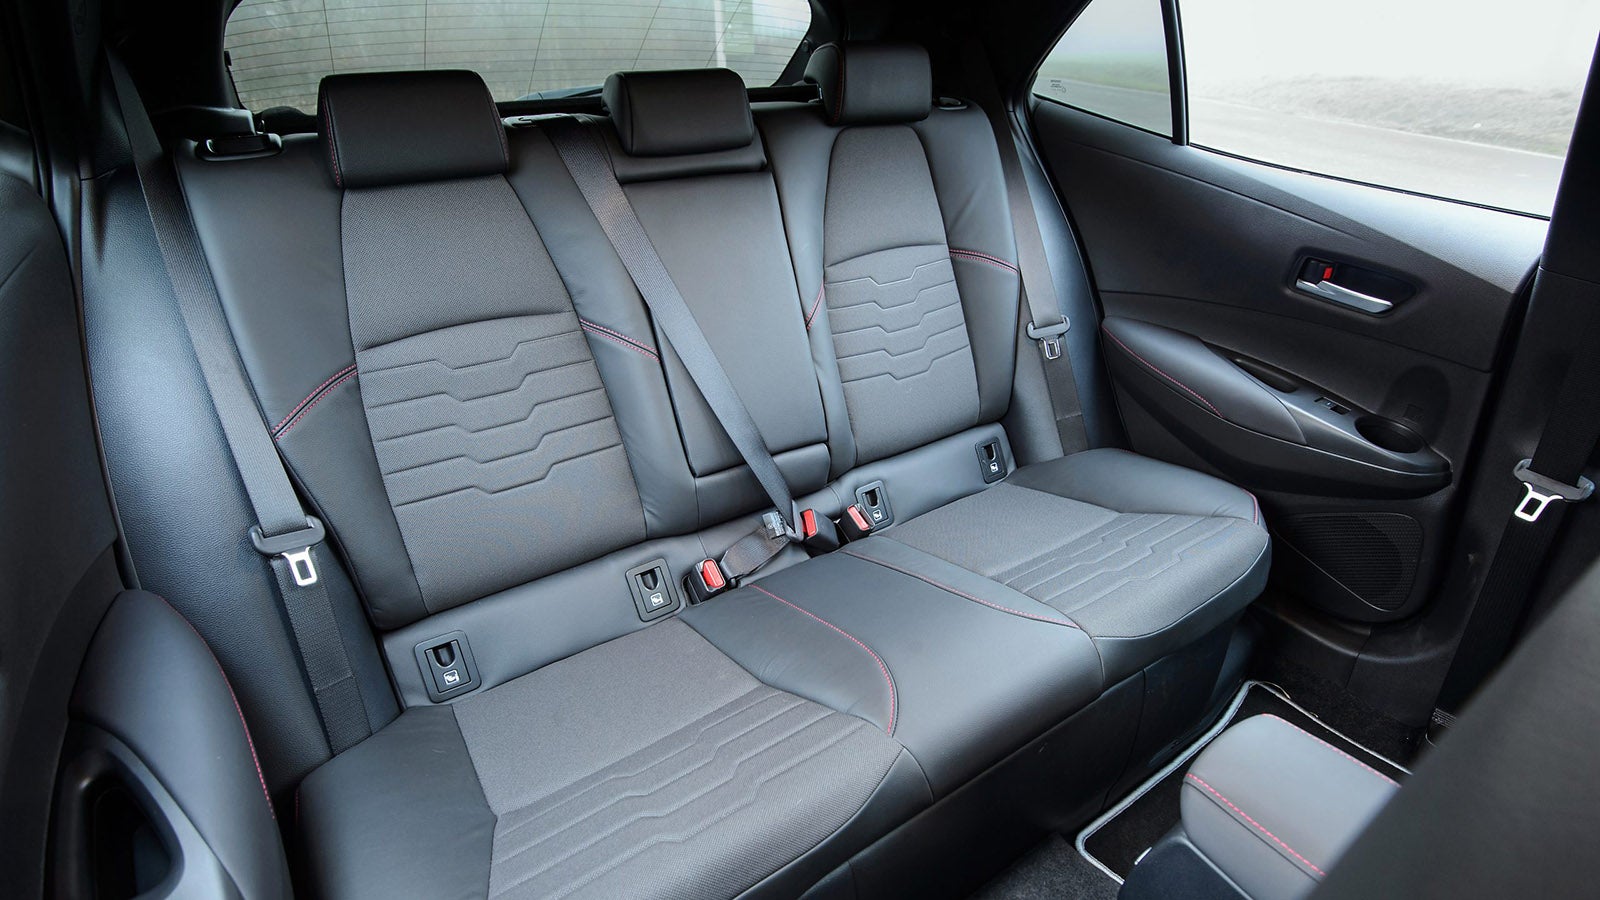 Toyota Corolla review rear seats